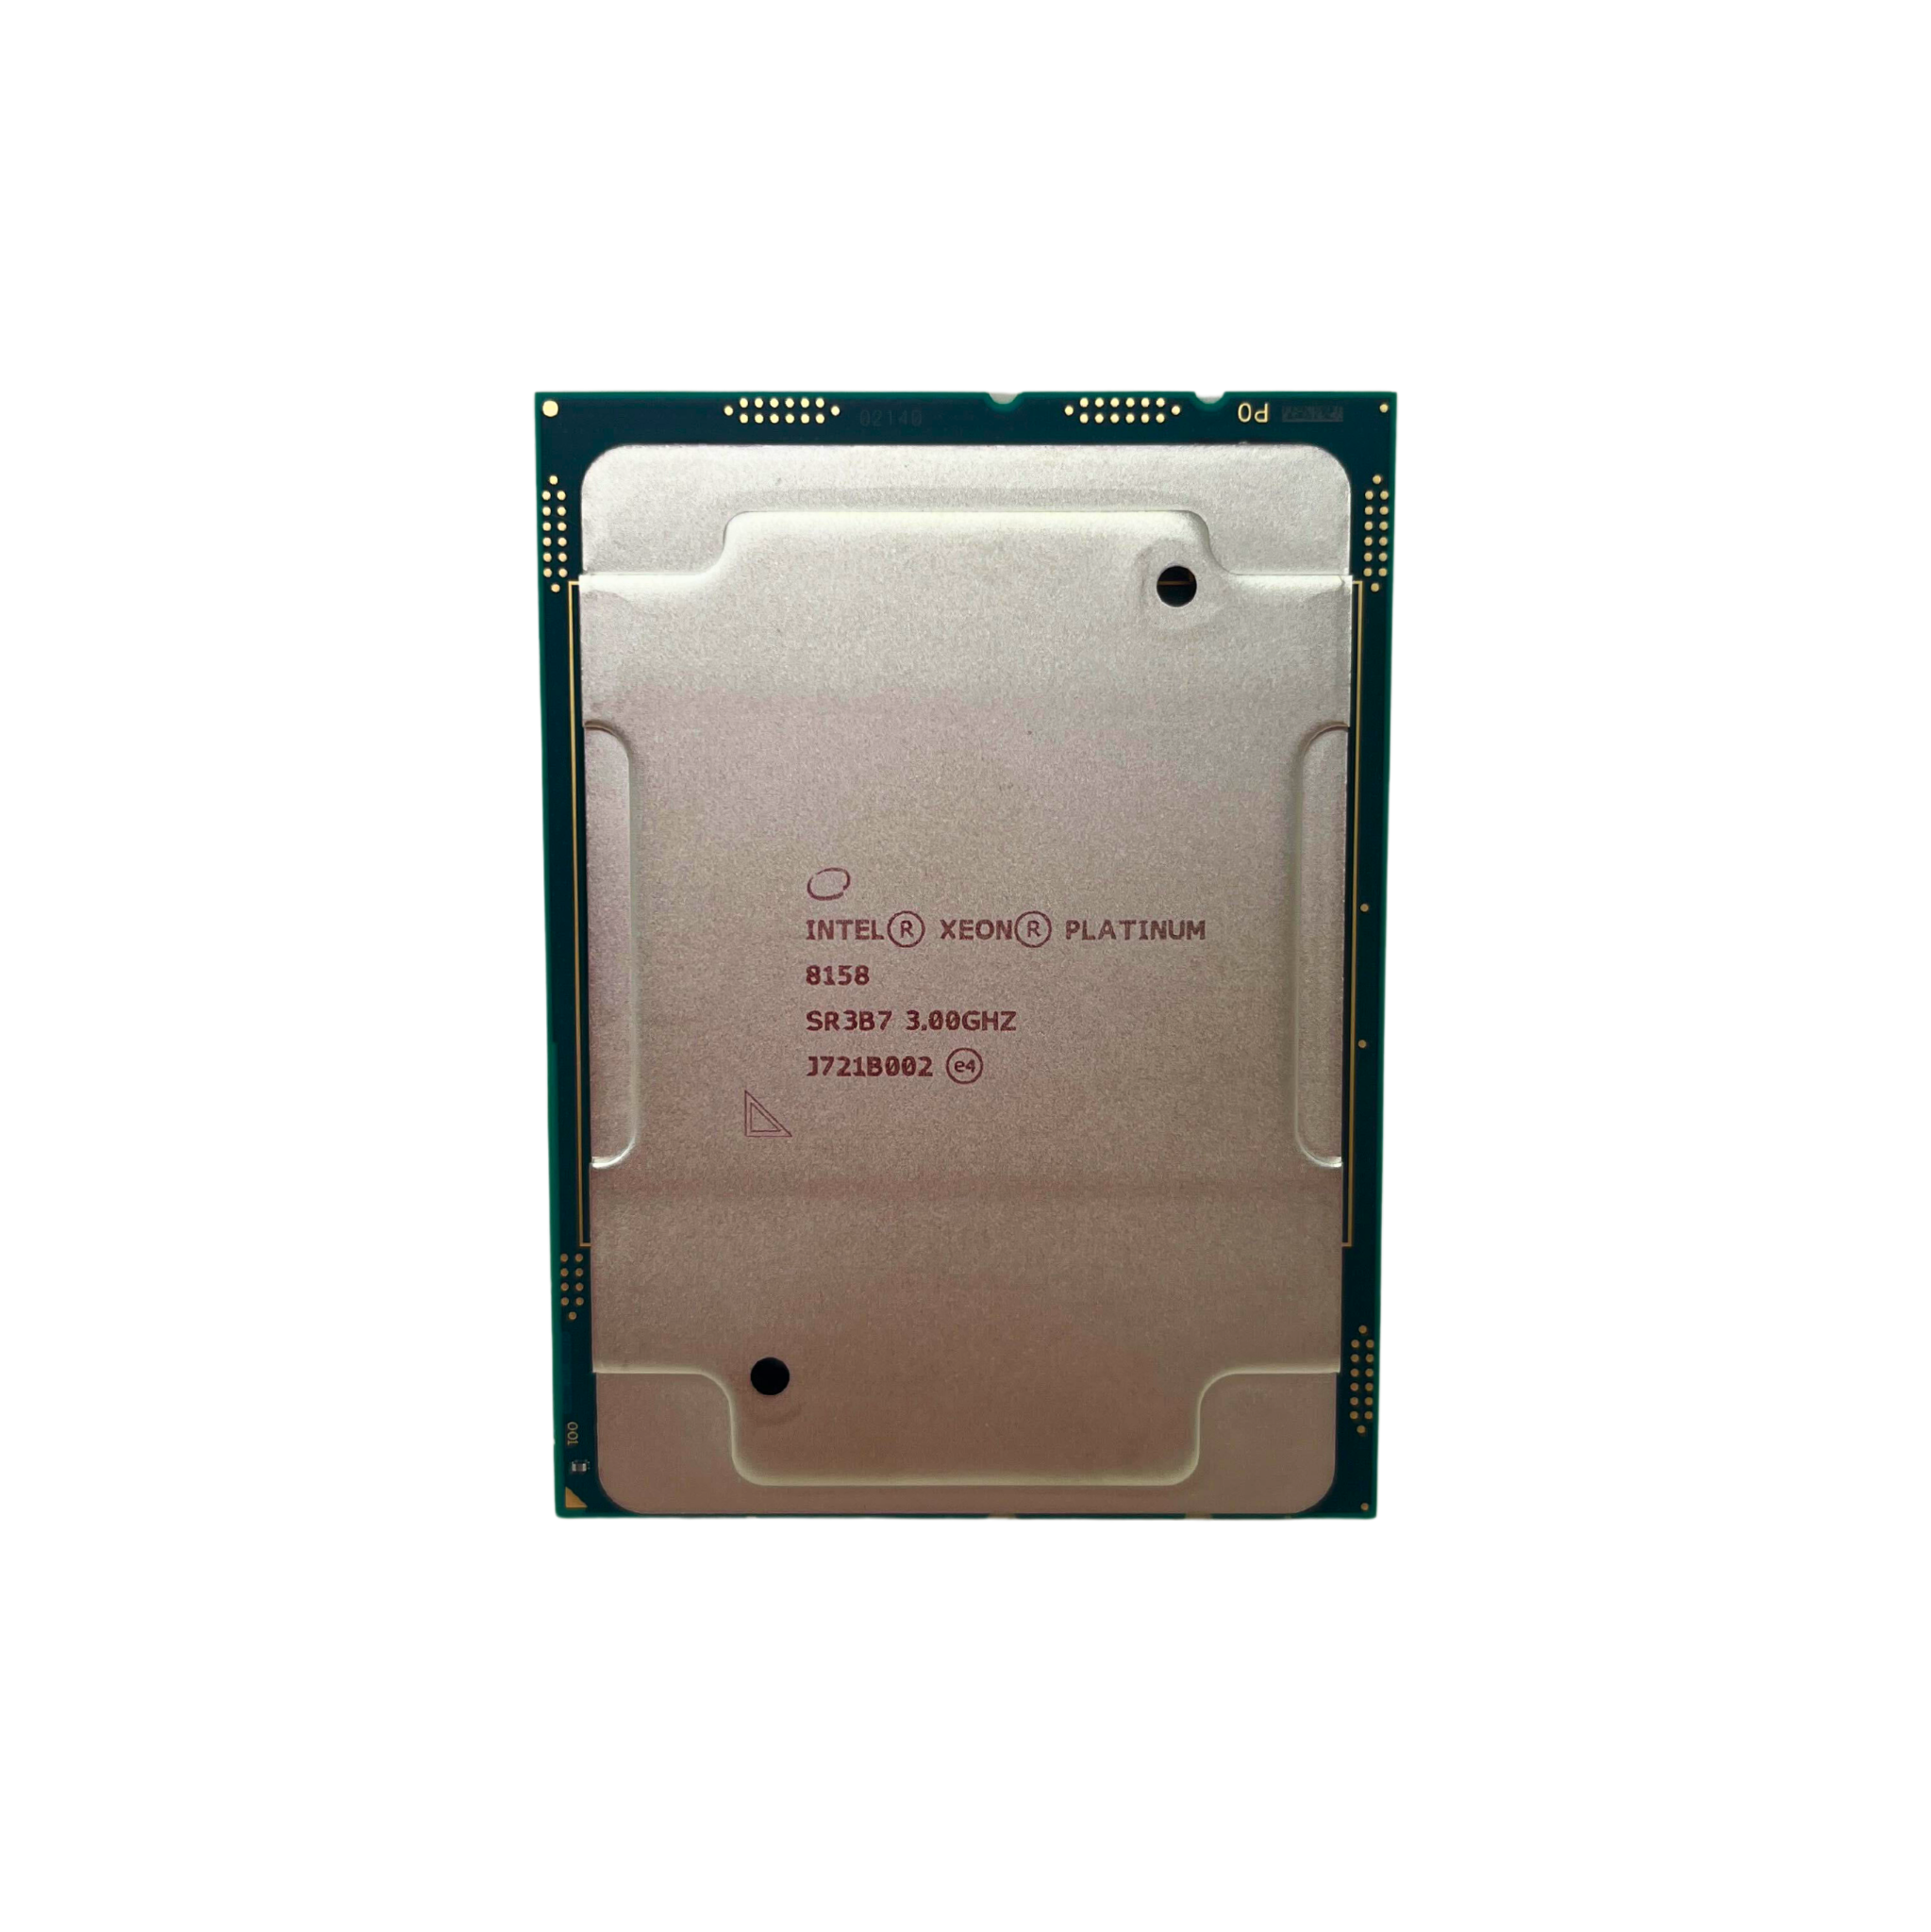 Cisco Intel  Xeon  PLATINUM 8158 12 CORE 3.00GHZ 24.75MB L3 CACHE TDP 150W FCLGA3647 Processor (UCS-CPU-8158)